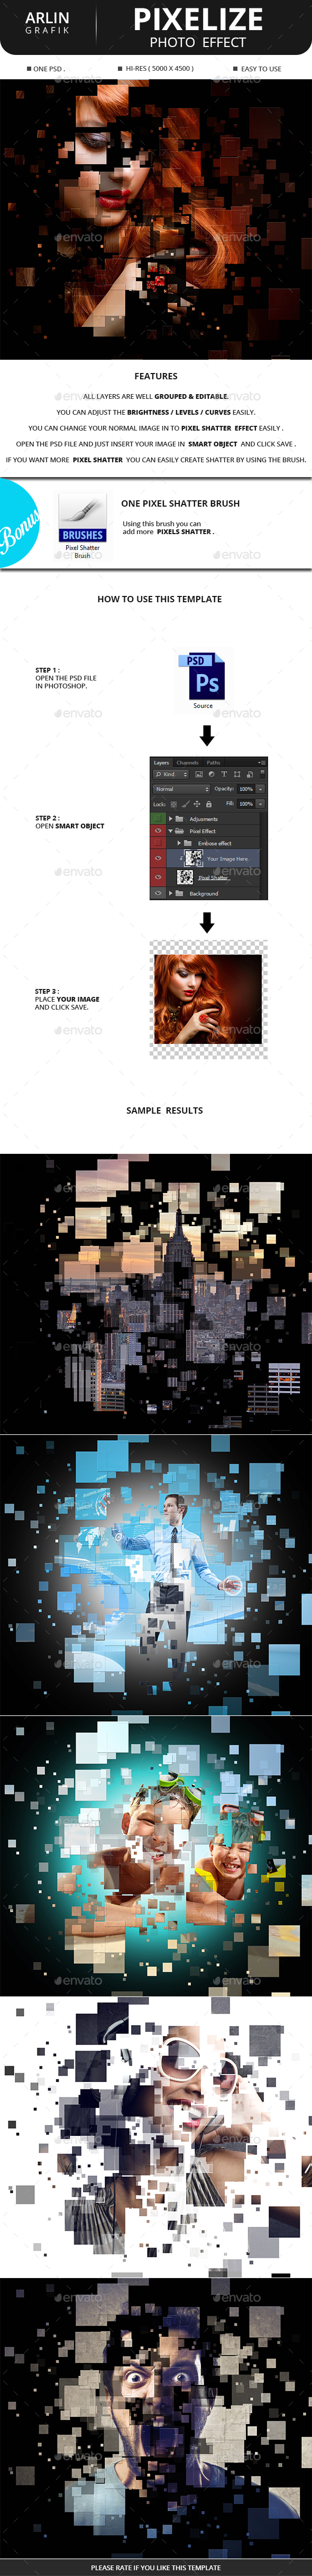 Pixel Shatter Photo Effect by arlingrafik | GraphicRiver